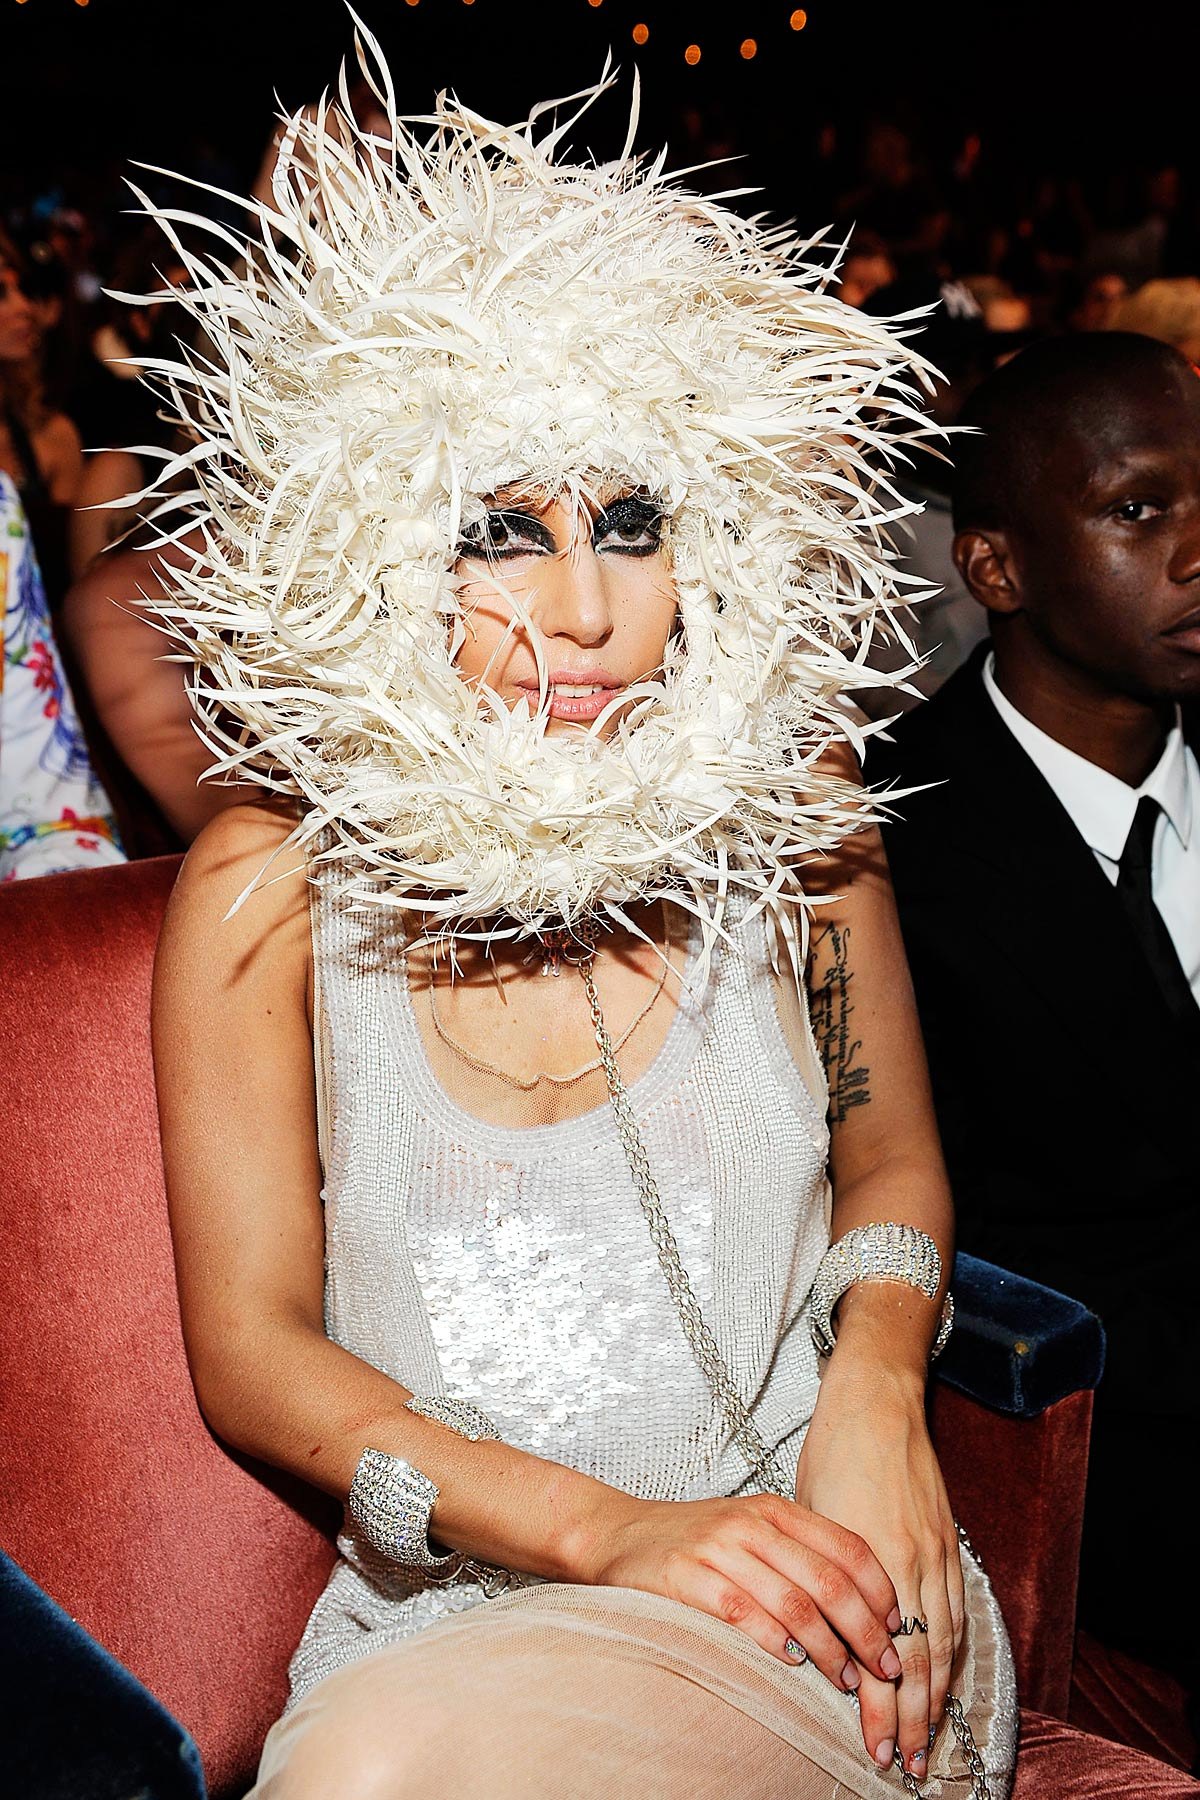 Veteran Lady Gaga Or Teen Billie Ellish: Who’s Got The Craziest Looks? 2